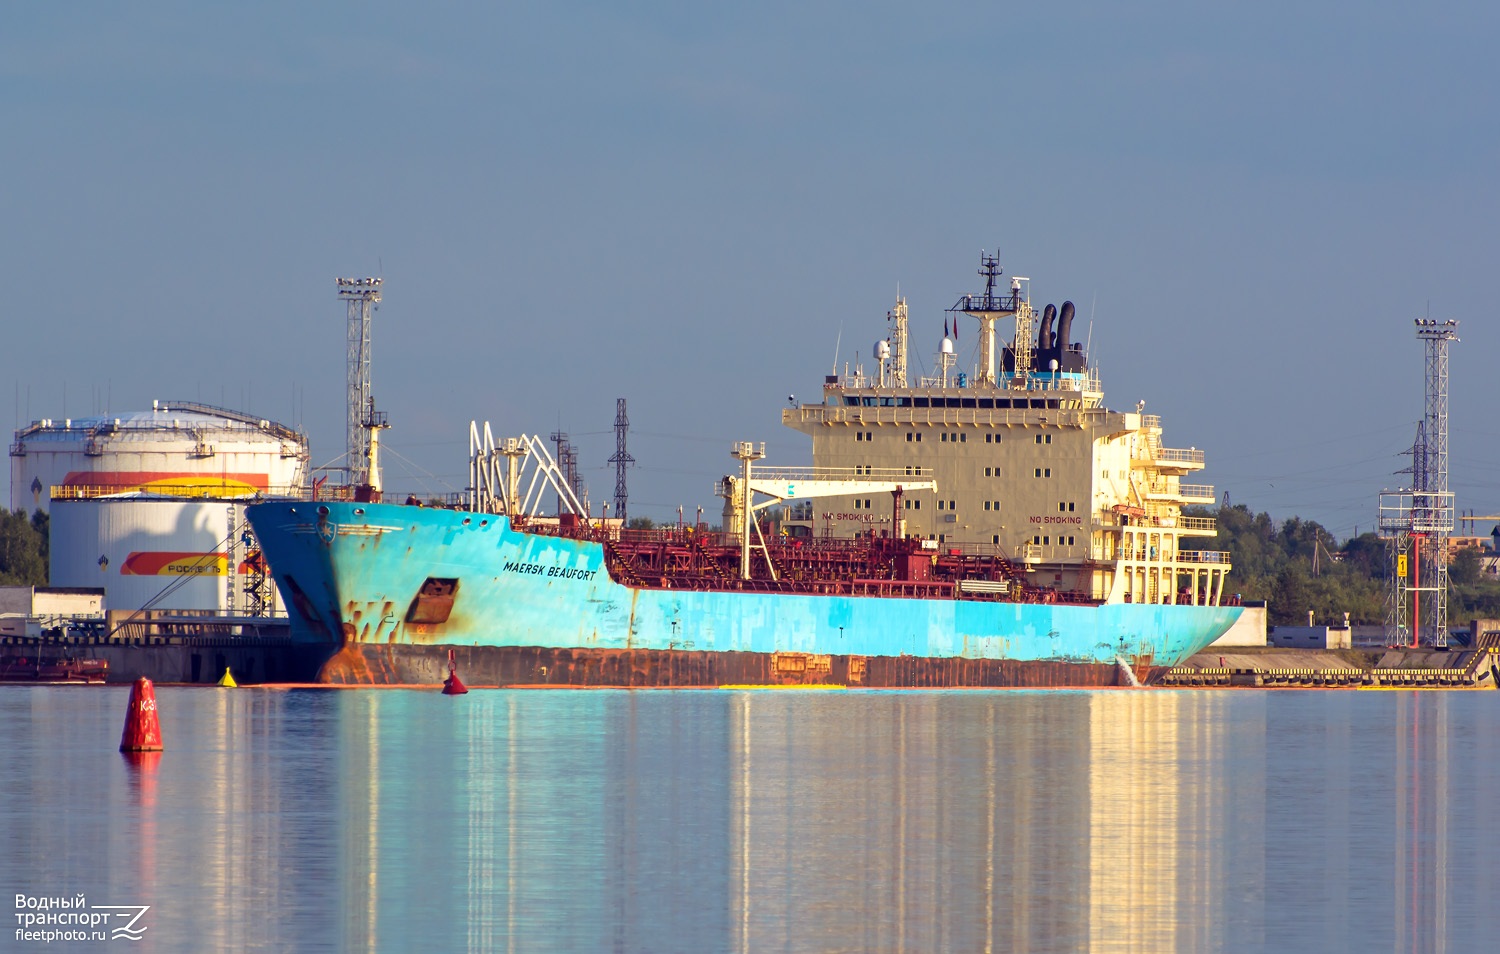 Maersk Beaufort